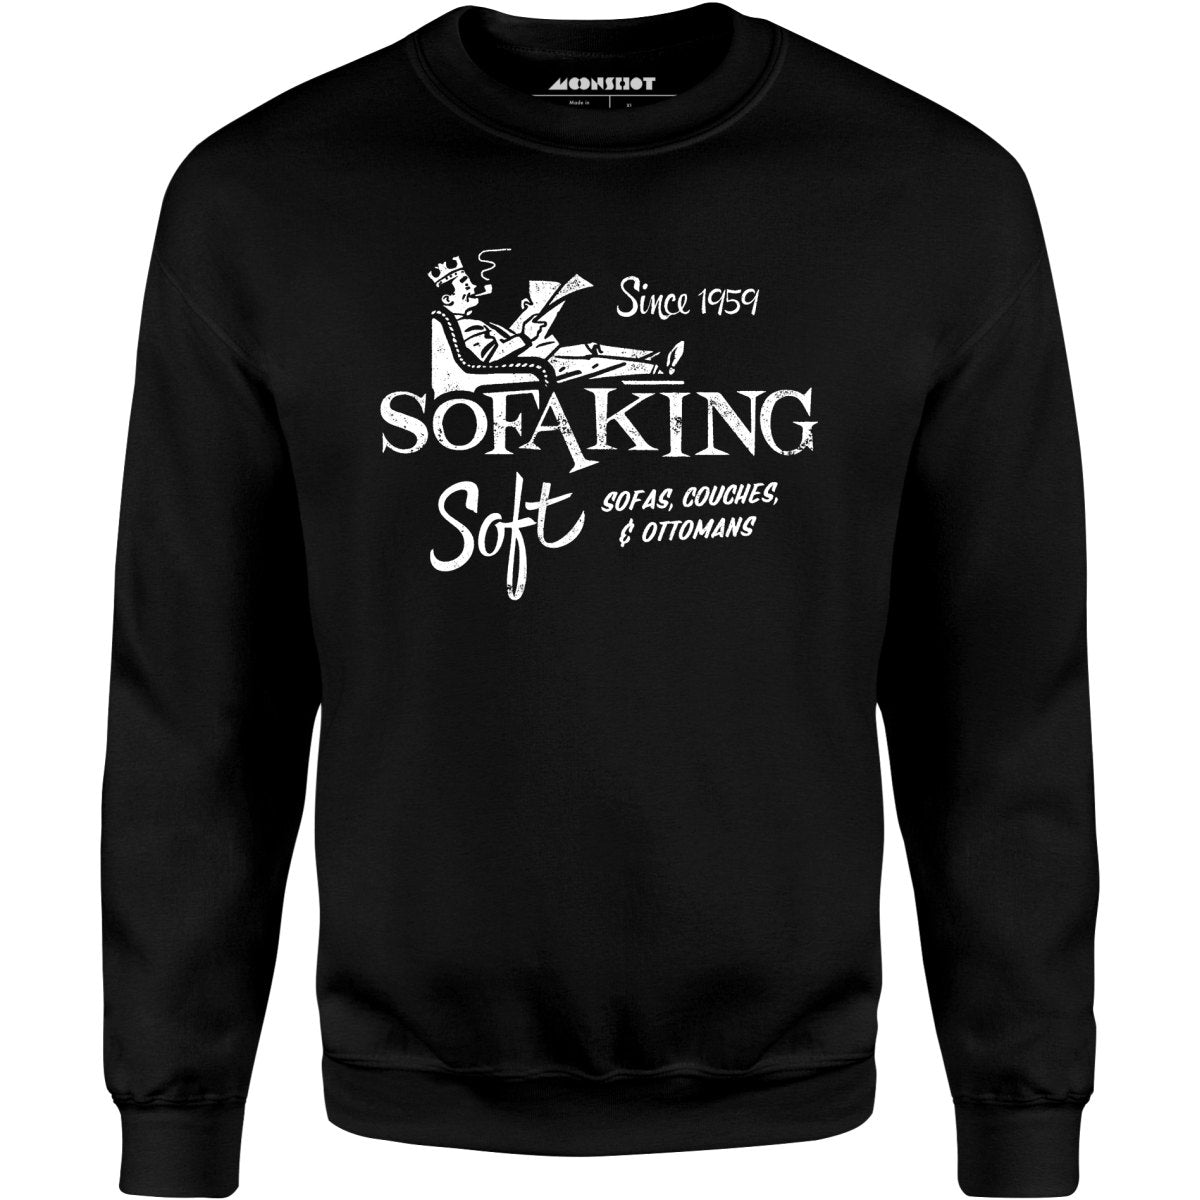 Sofa King Soft - Unisex Sweatshirt